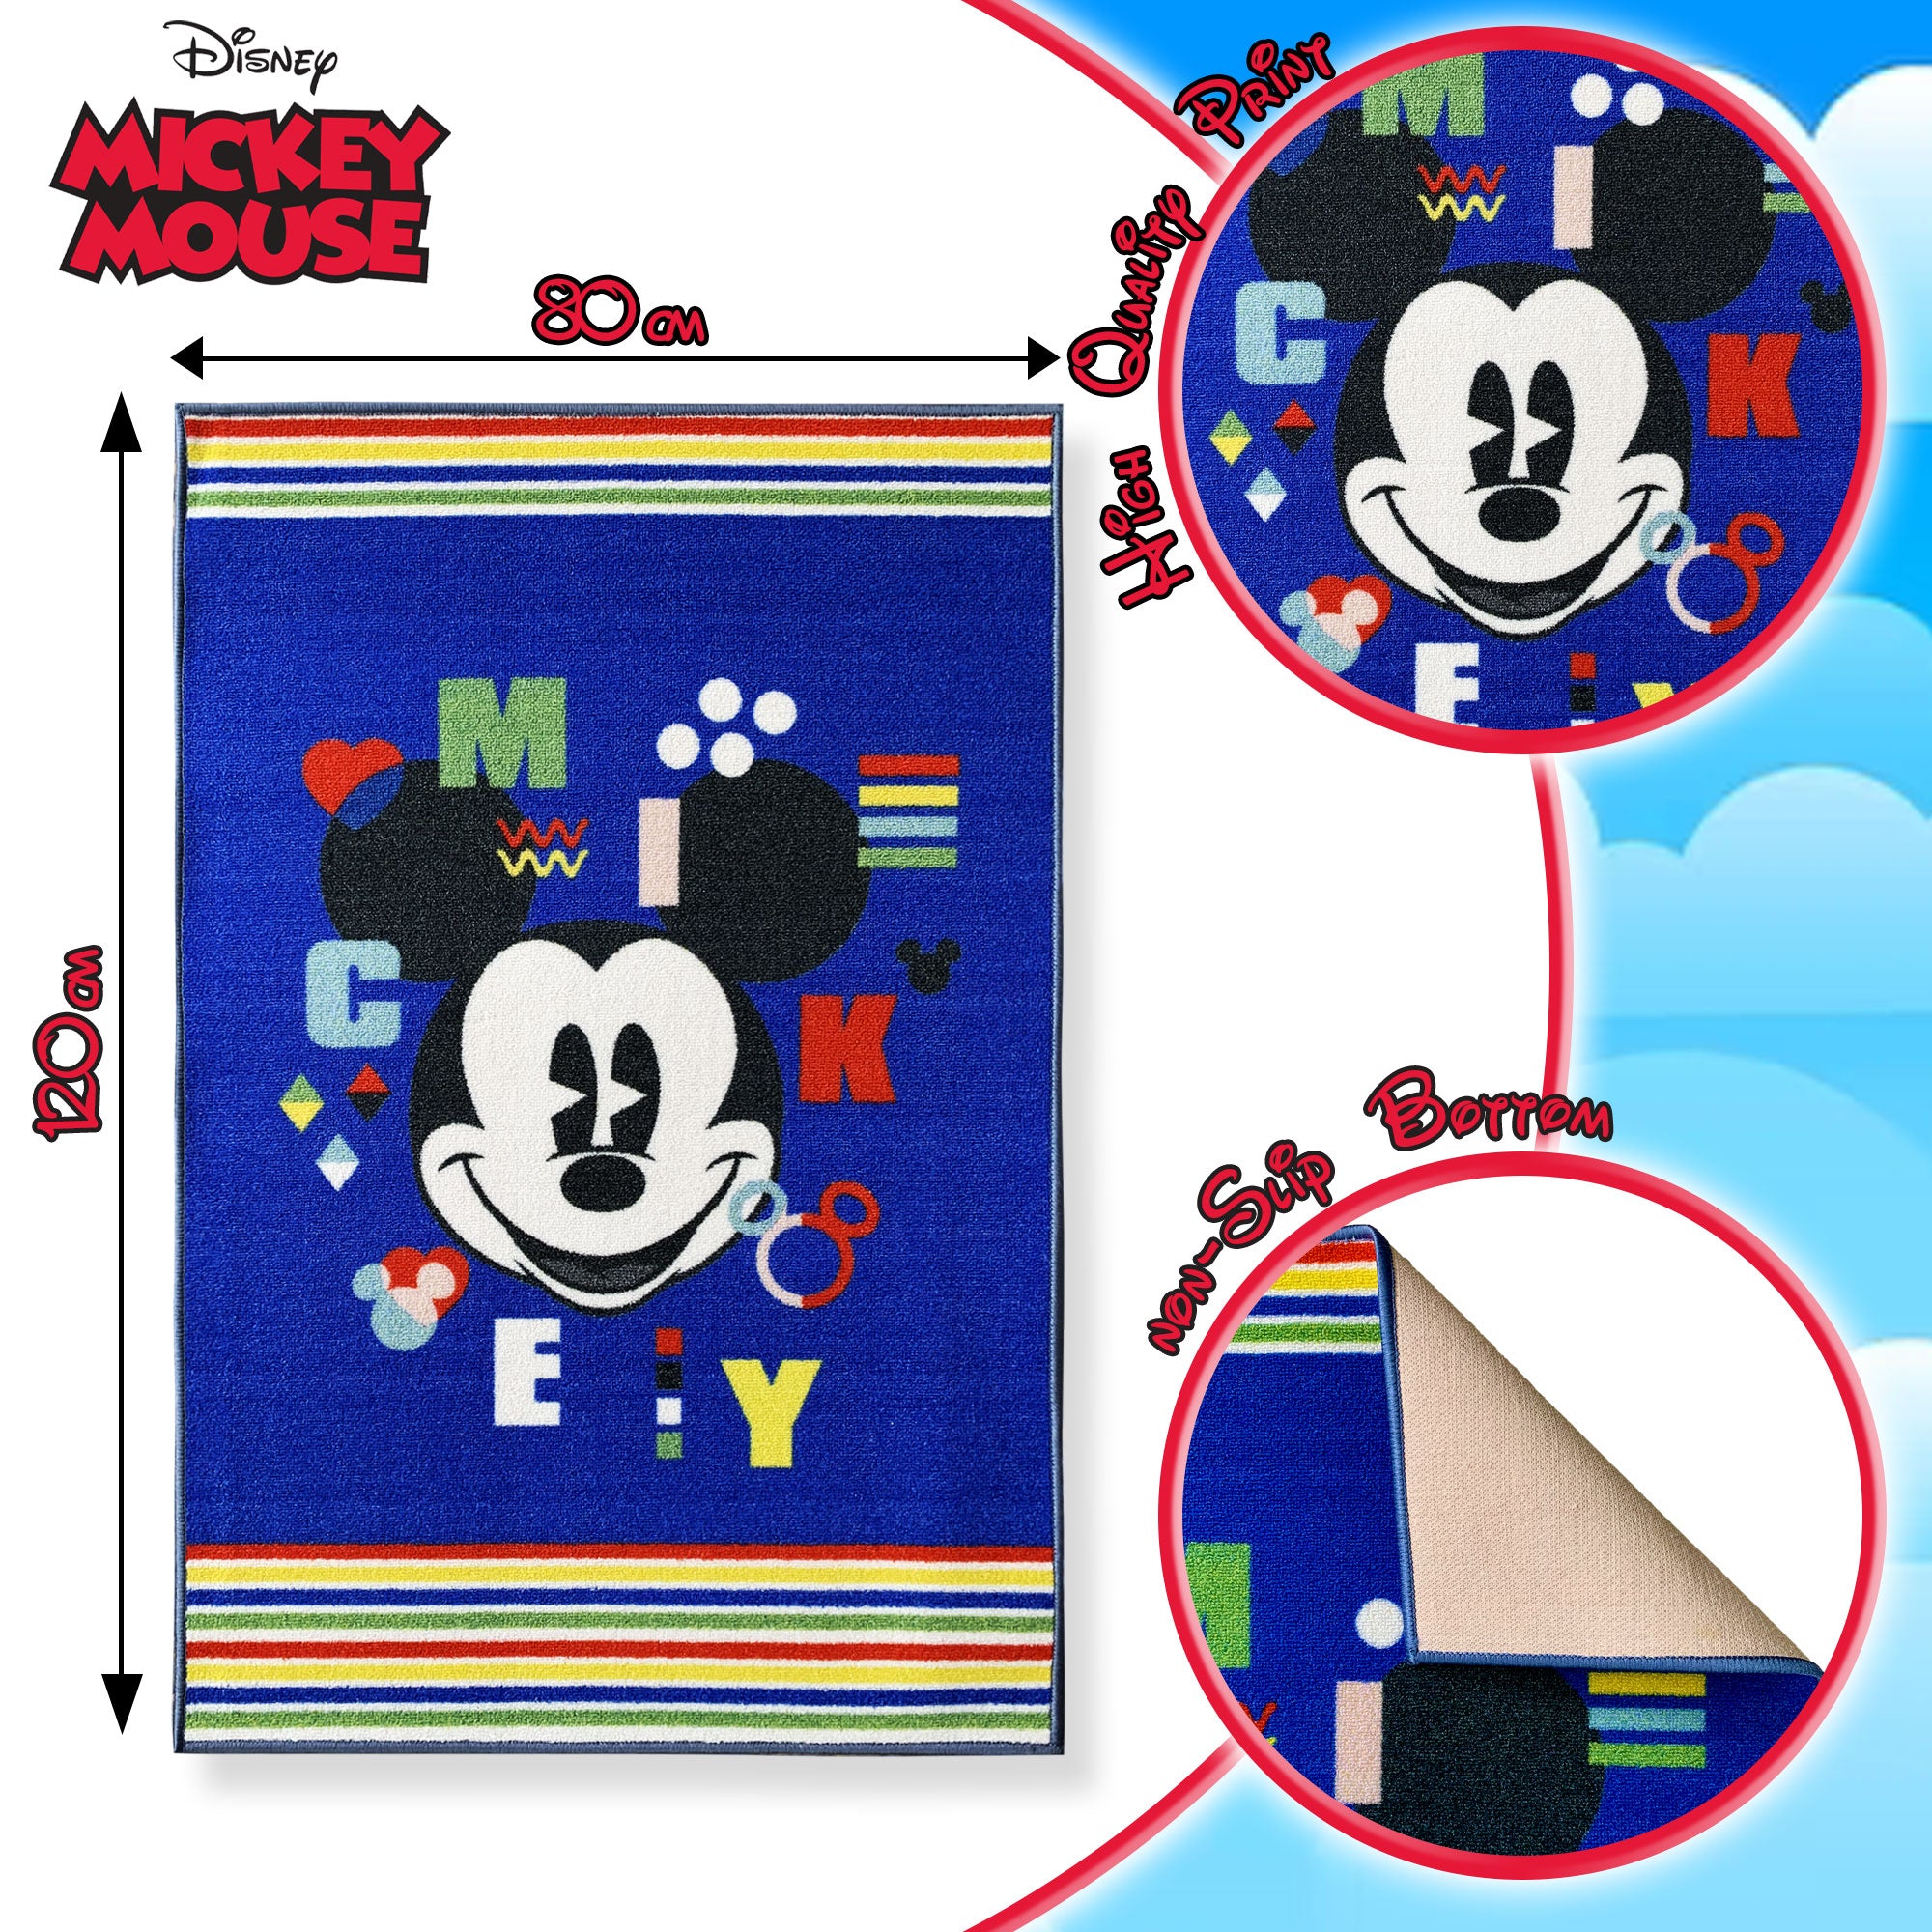 Tappeto antiscivolo cameretta bambini Disney Mickey Mouse 80x120cm 6338